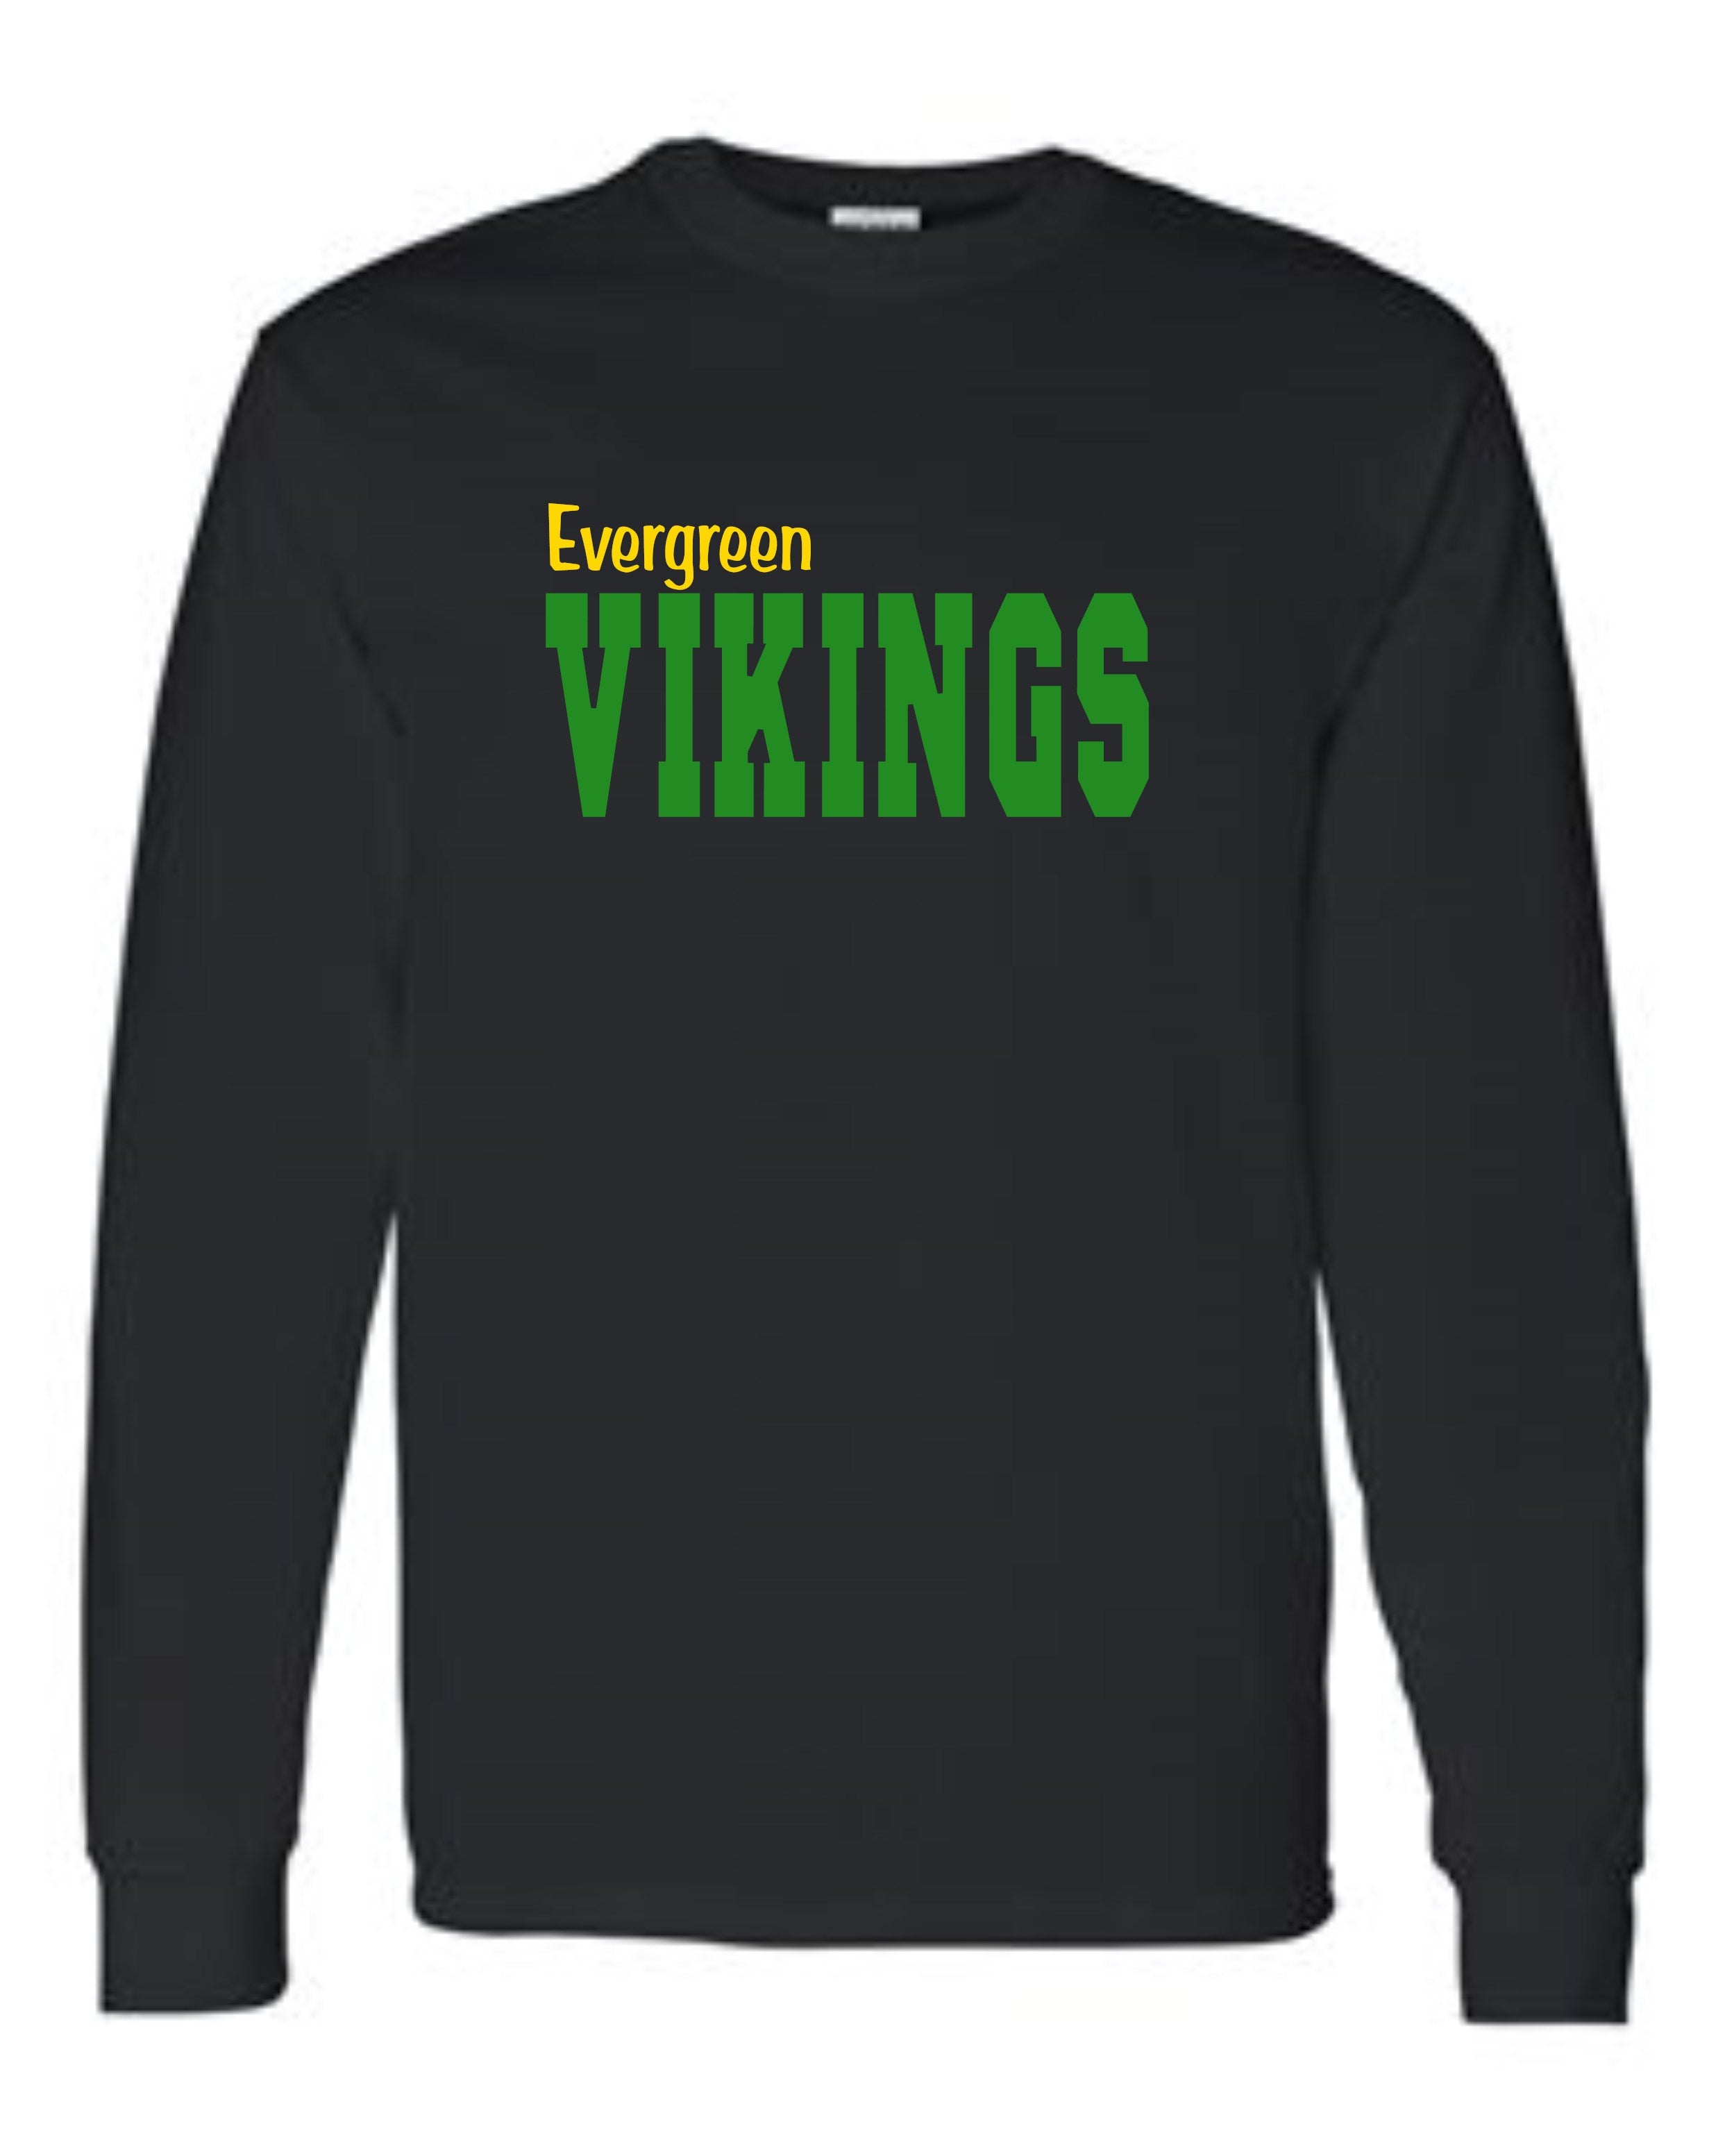 Evergreen Vikings